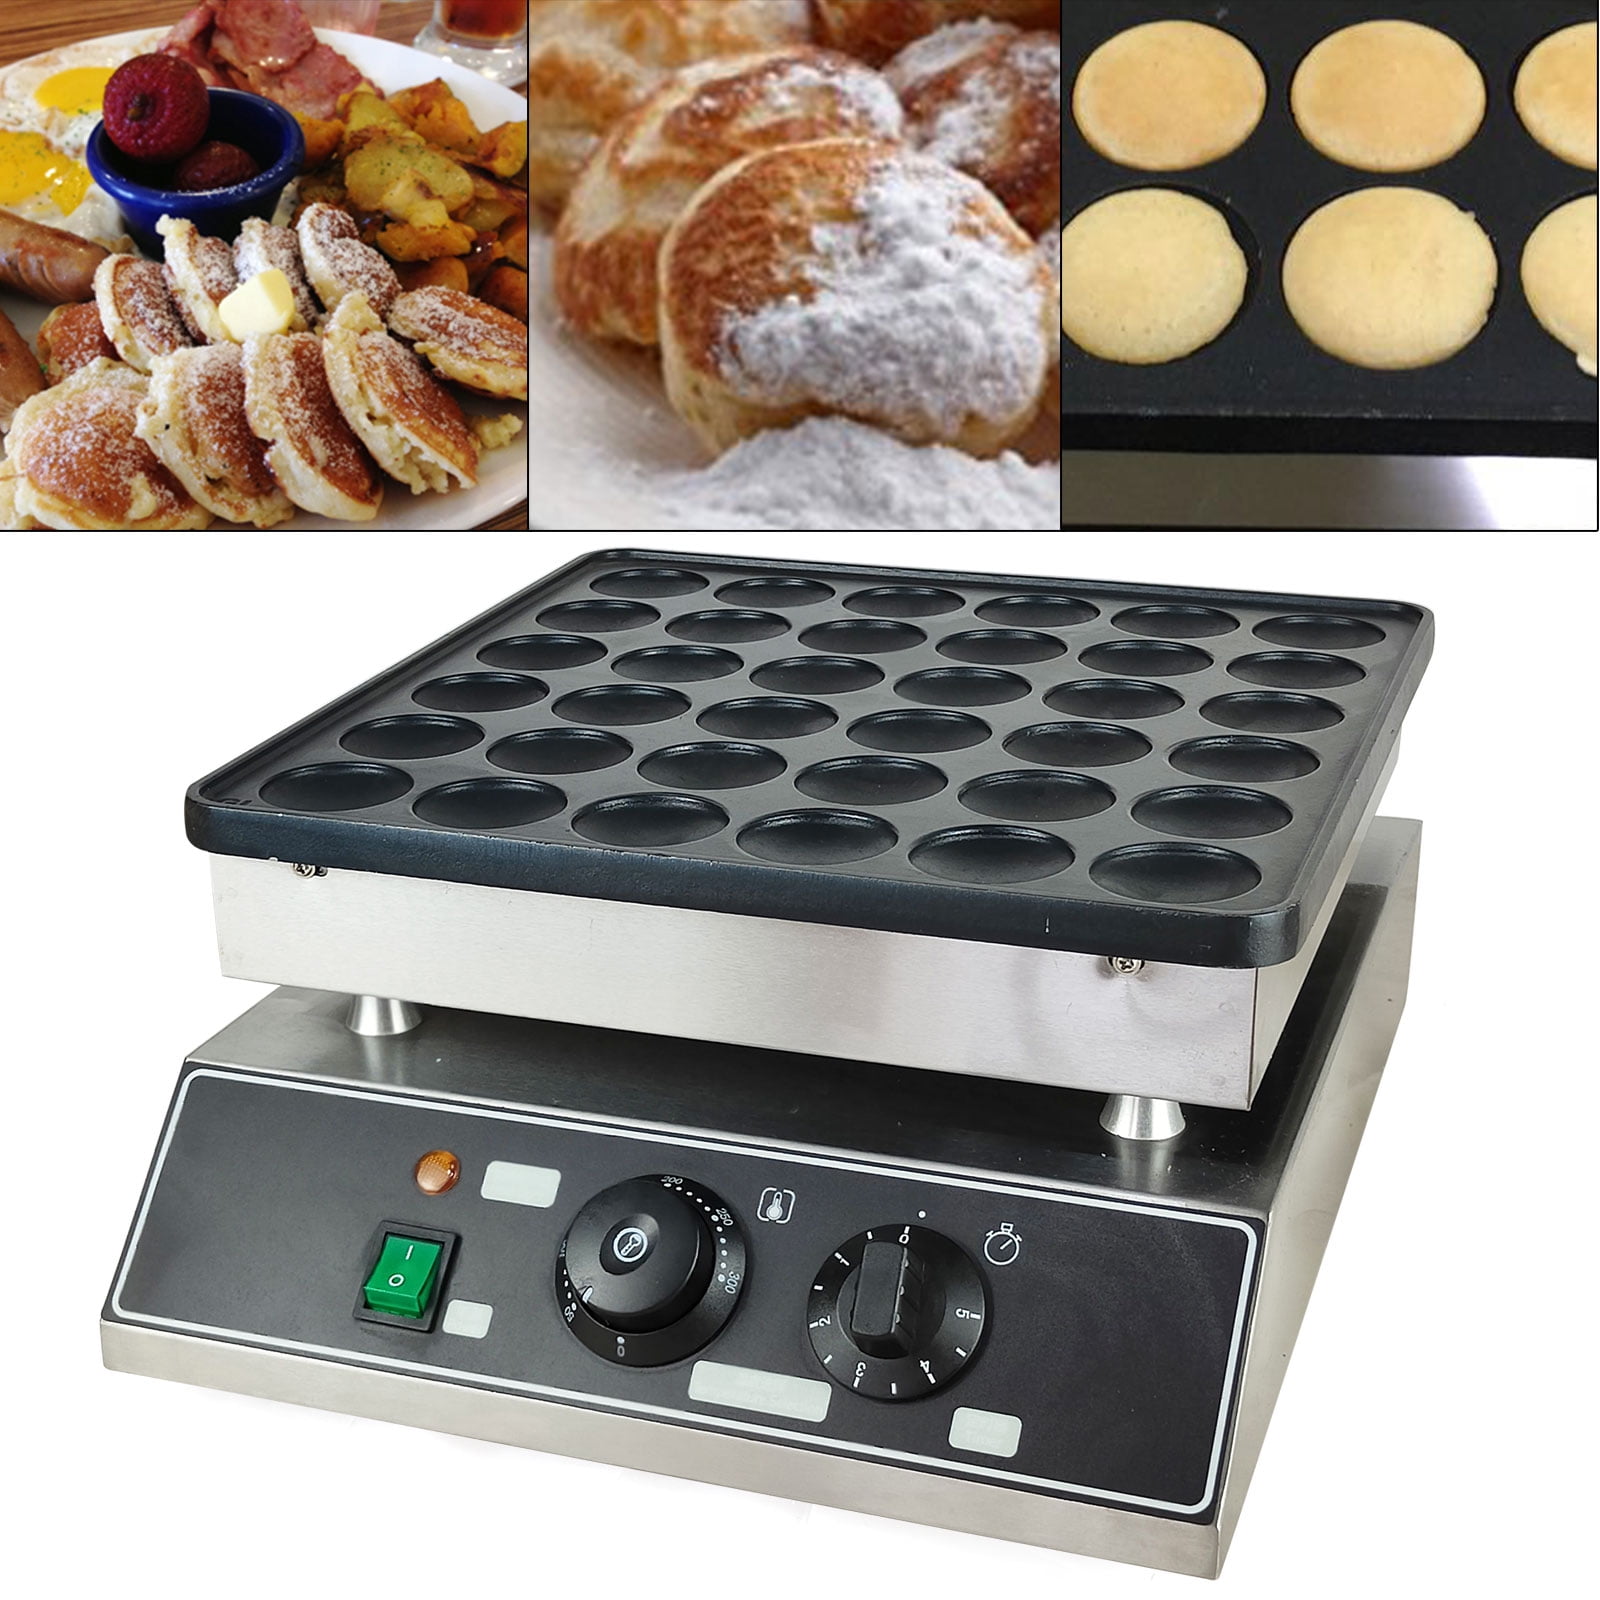 TFCFL 50 Holes Electric Waffle Maker Mini Pancakes Maker Baker